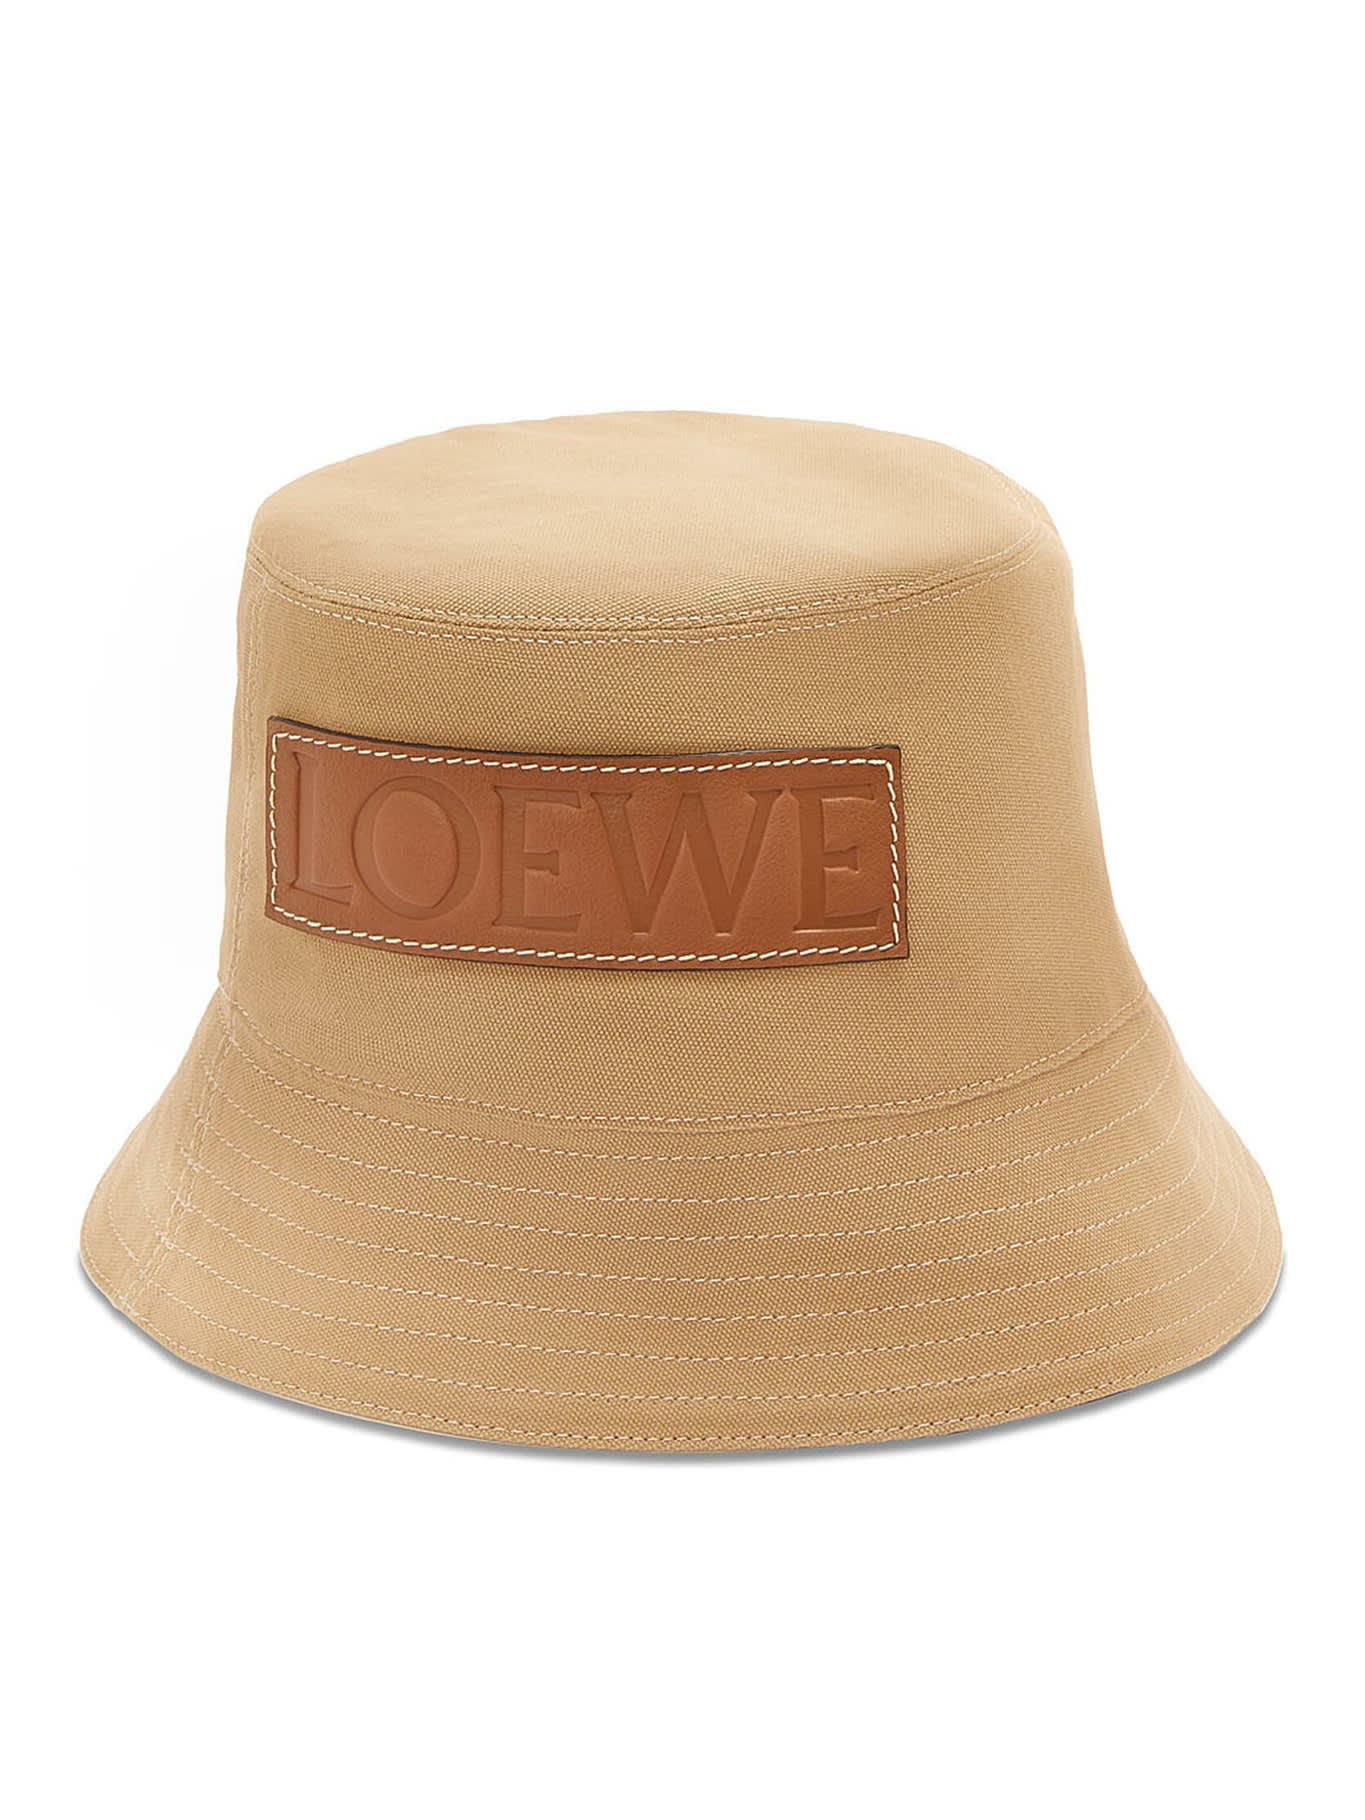 LOEWE BUCKET HAT